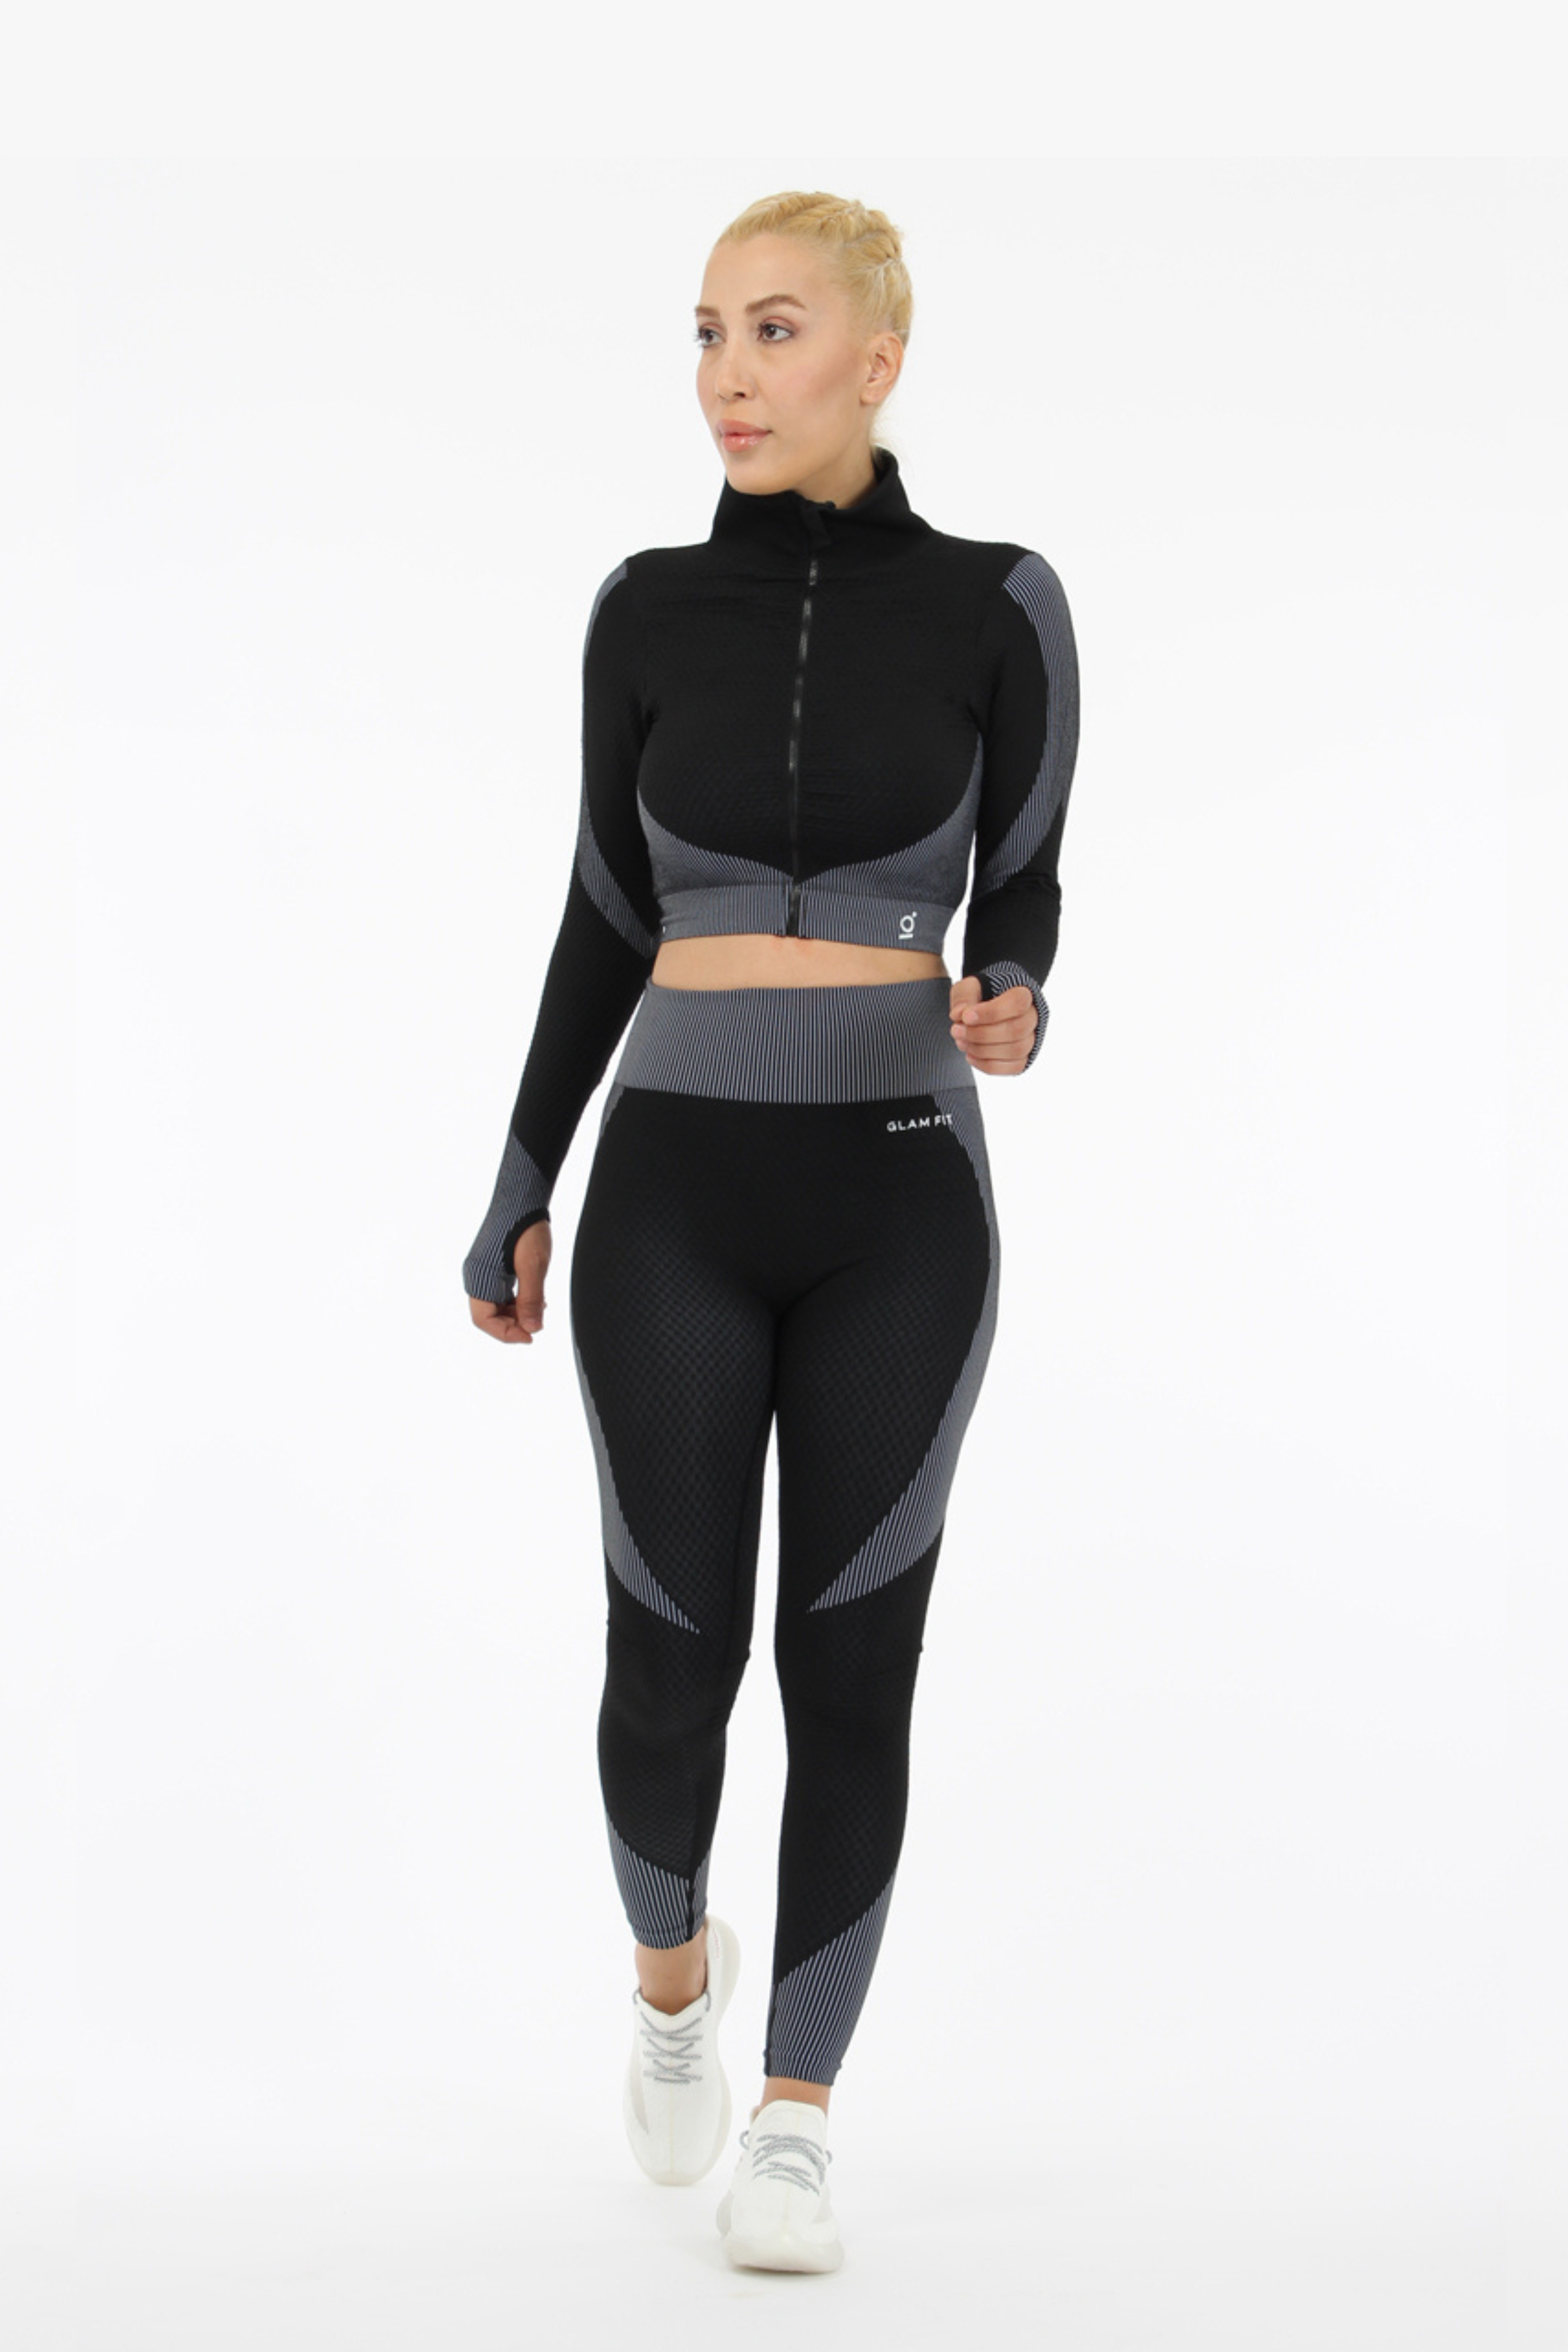 Womens Ladies Seamless Gym Fitness Yoga Suit Long Sleeve Zipper